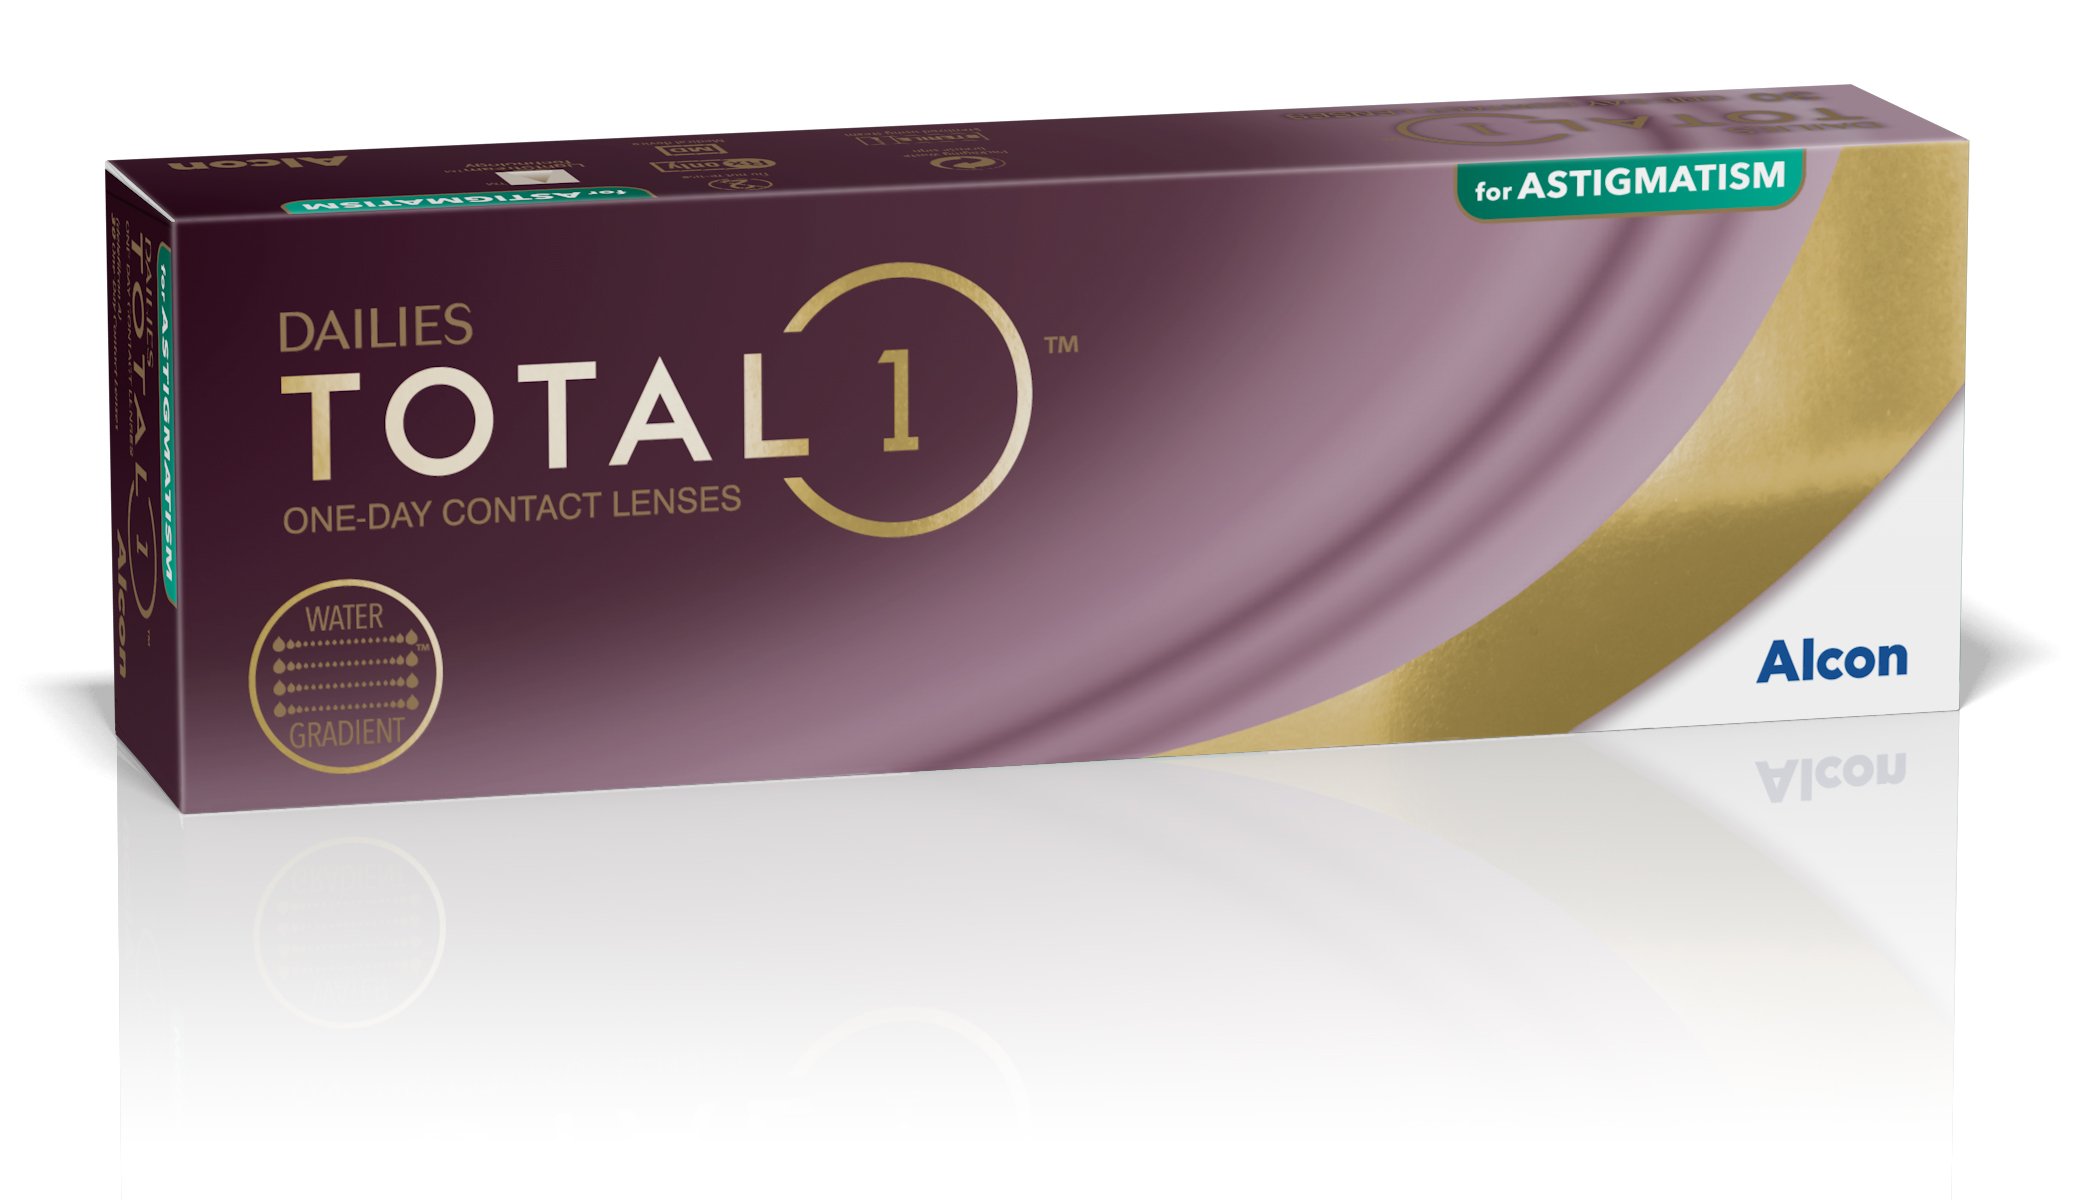 Das Bild zeigt die Verpackung der  Kontaktlinse Dailies Total 1 for Astigmatism.